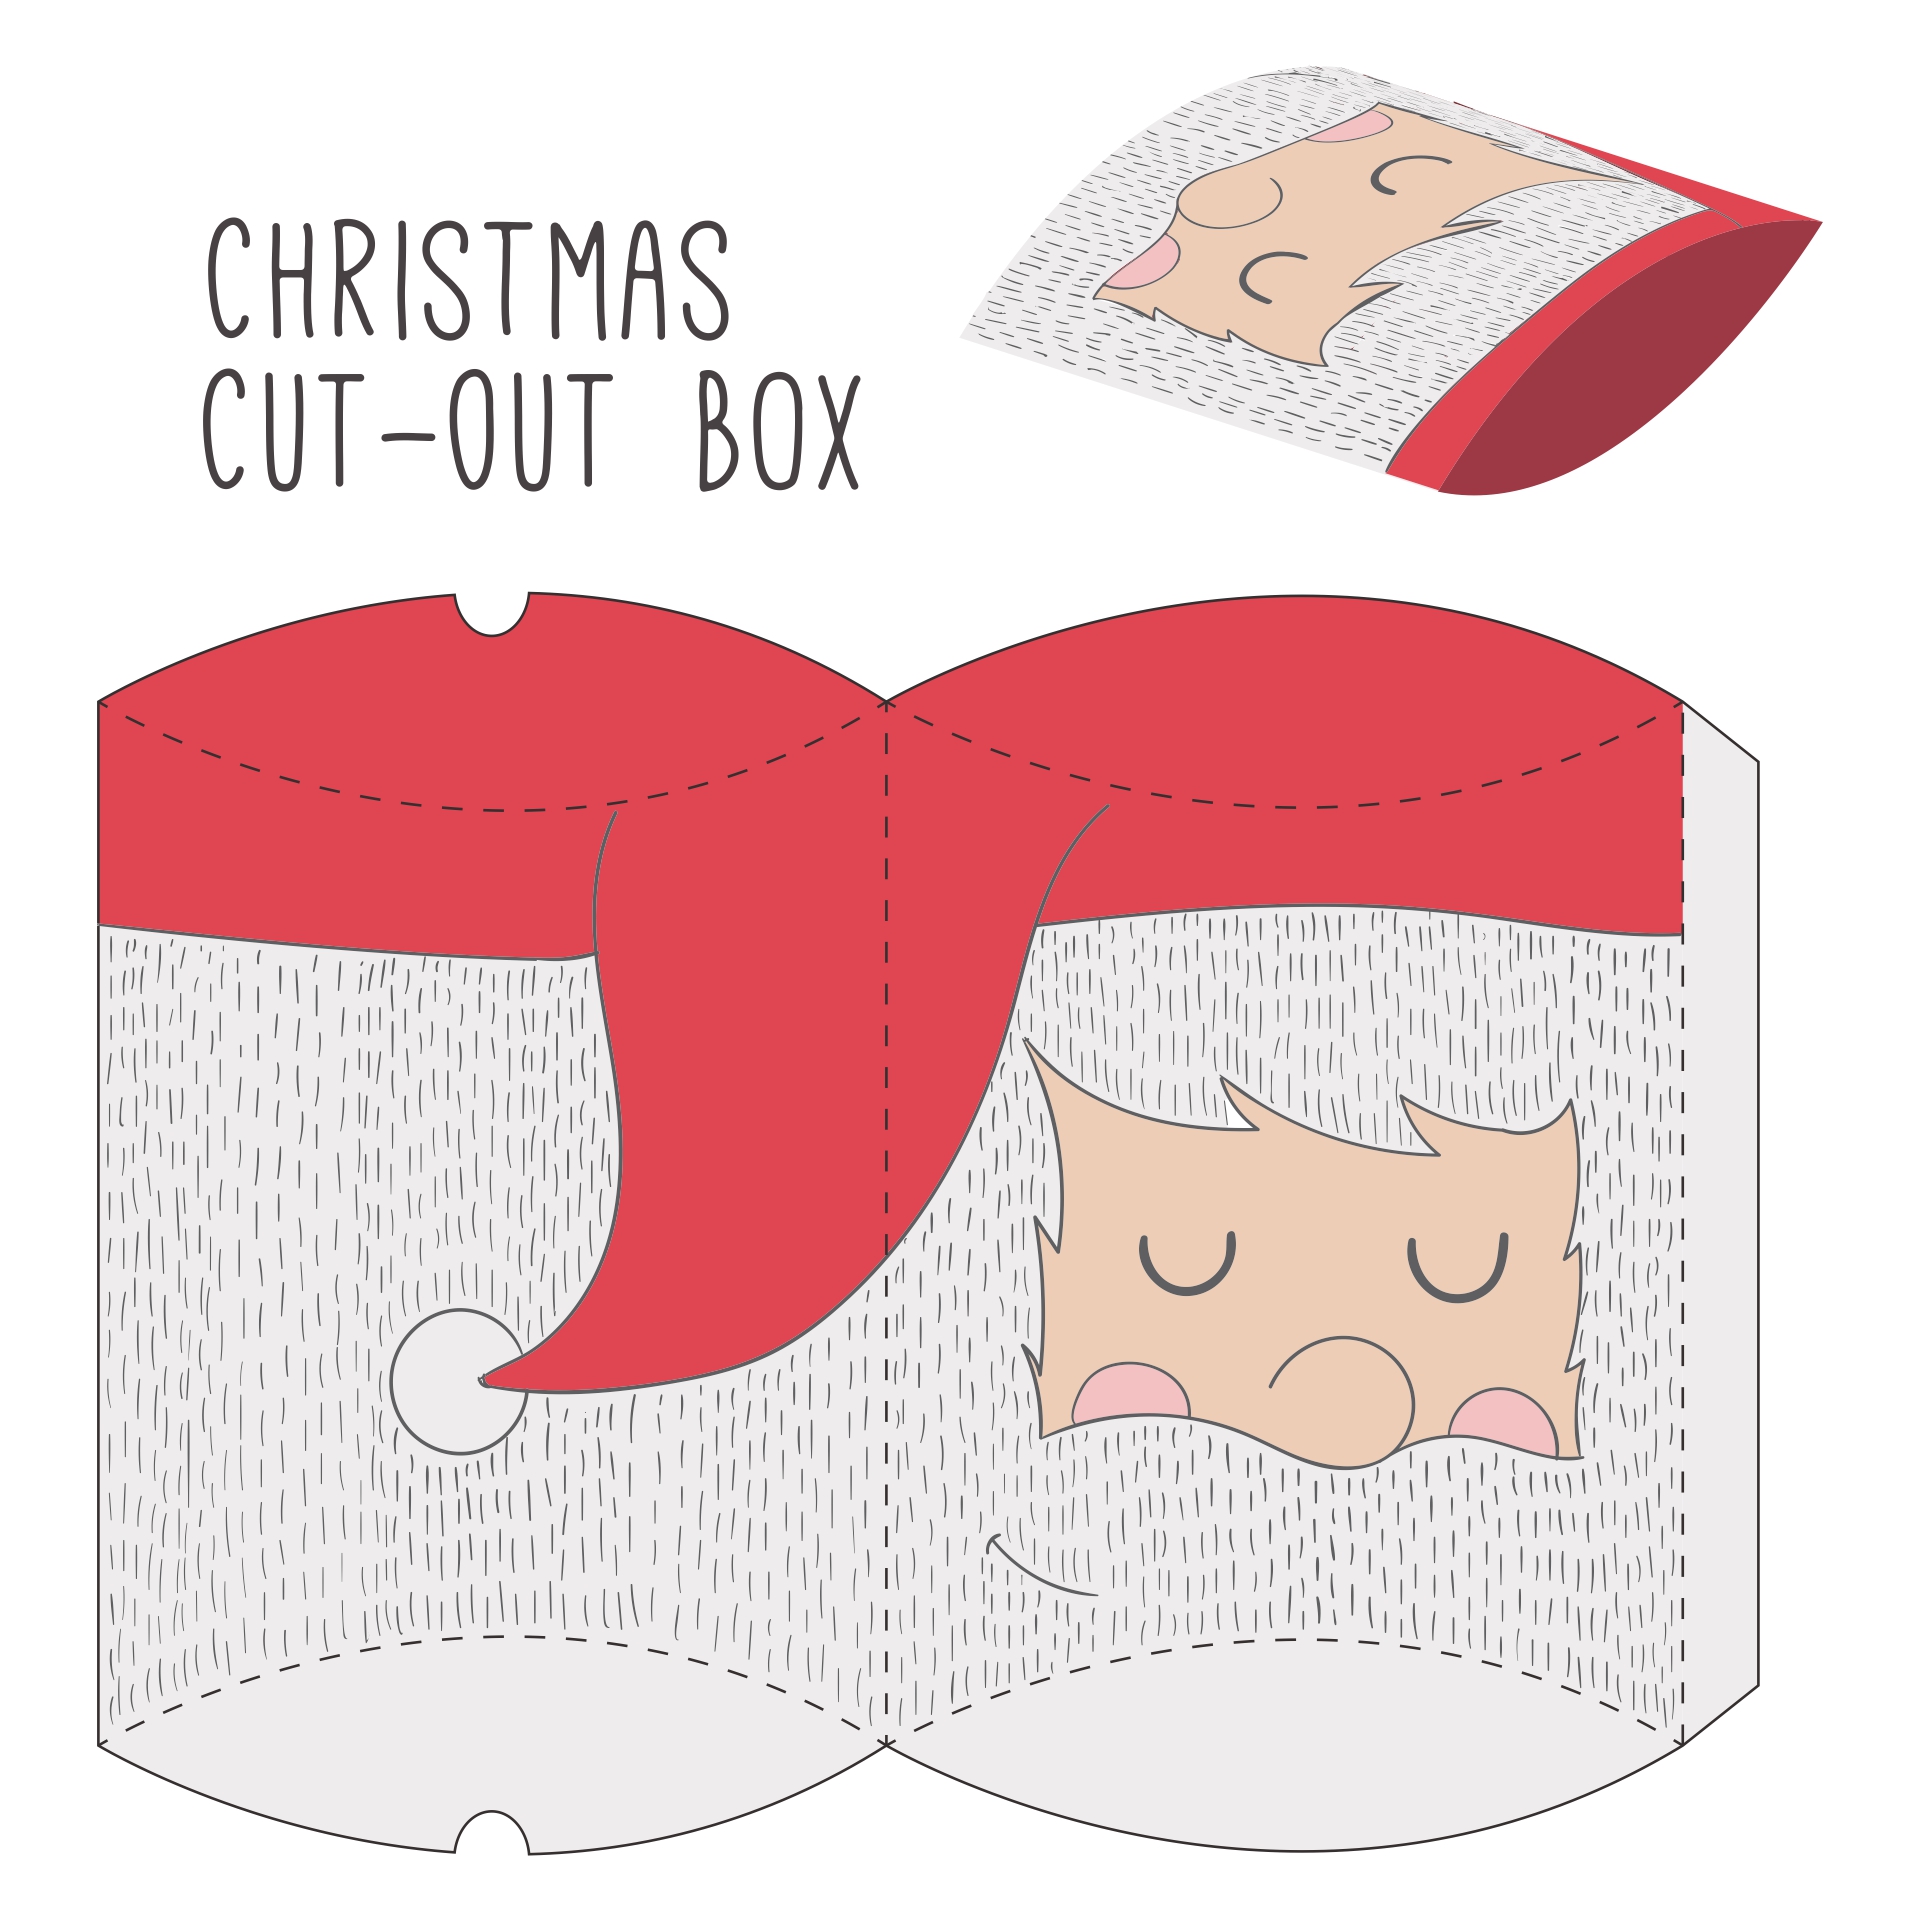 free-holiday-printable-for-a-small-treat-box-no-instructions-photo